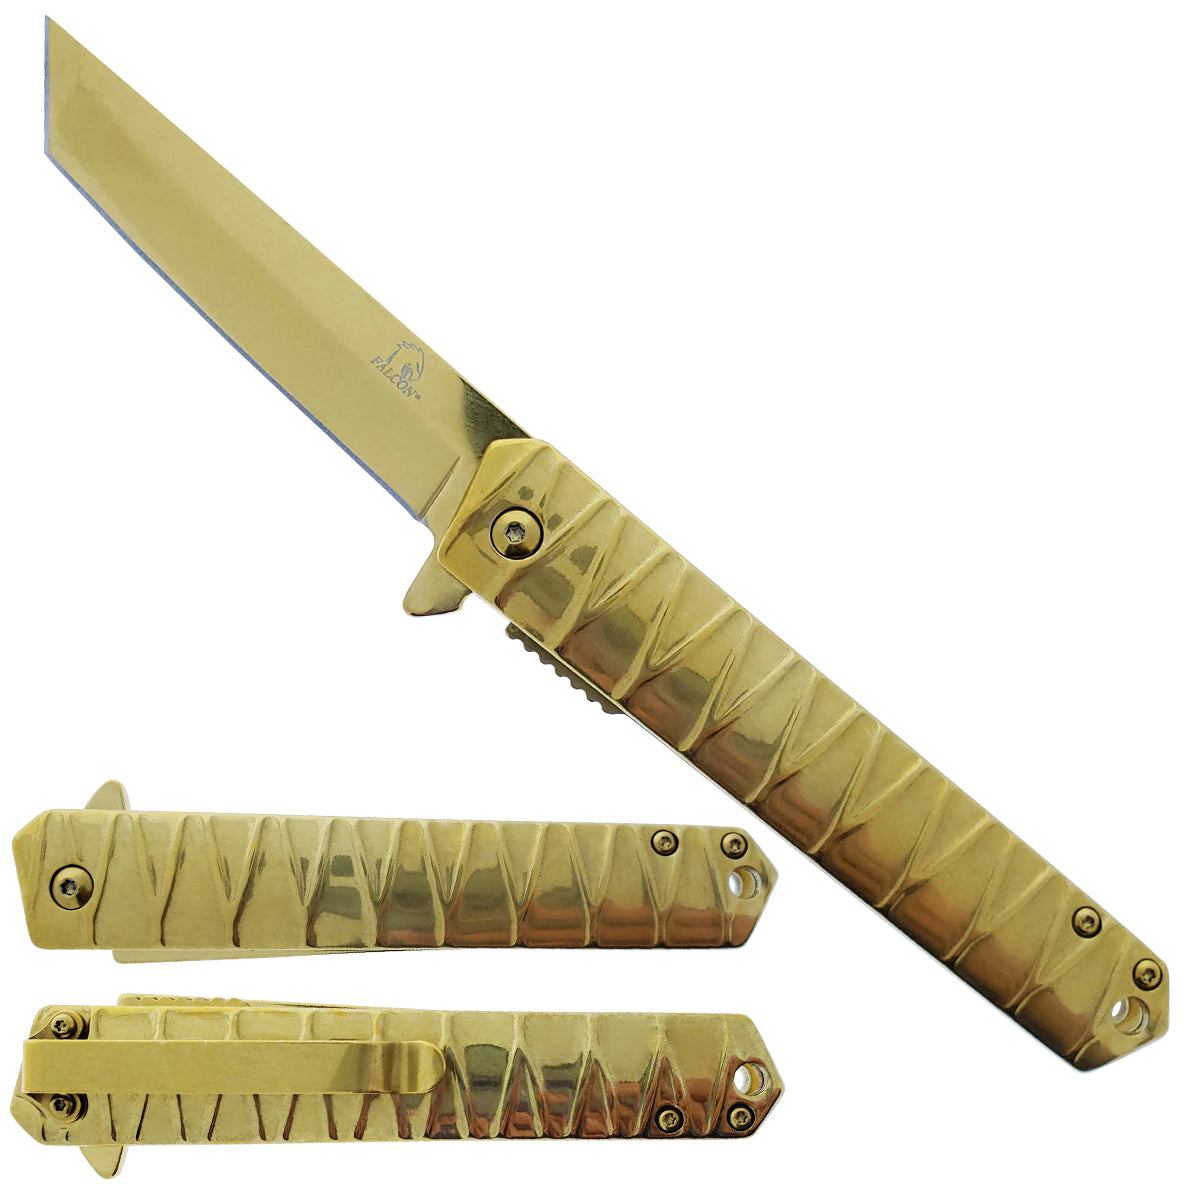 Wholesale Tanto Knife Shop Online: Falcon Gold Tanto Pocket Knife.